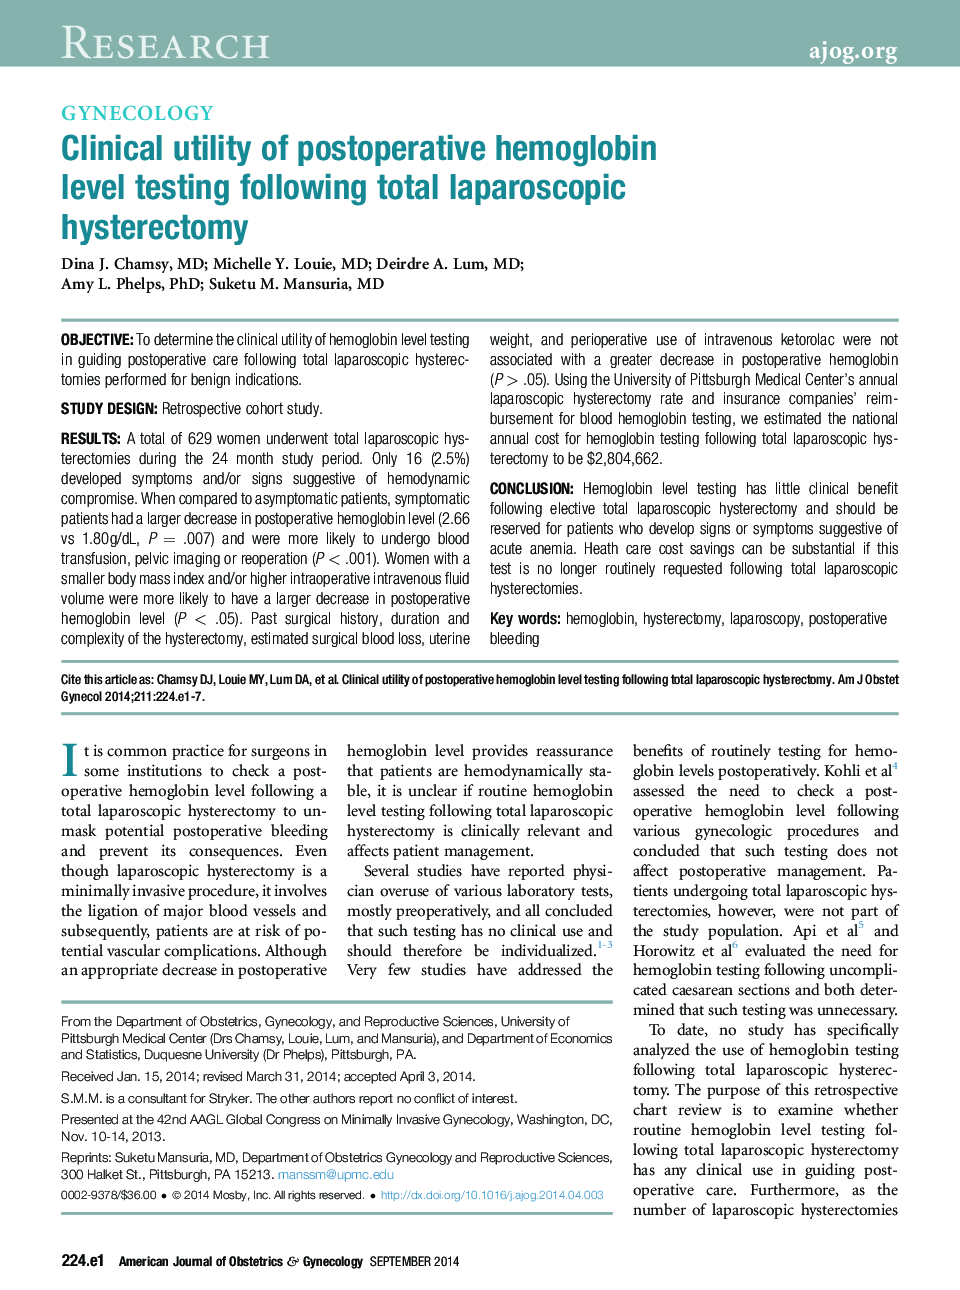 Clinical utility of postoperative hemoglobin level testing following total laparoscopic hysterectomy